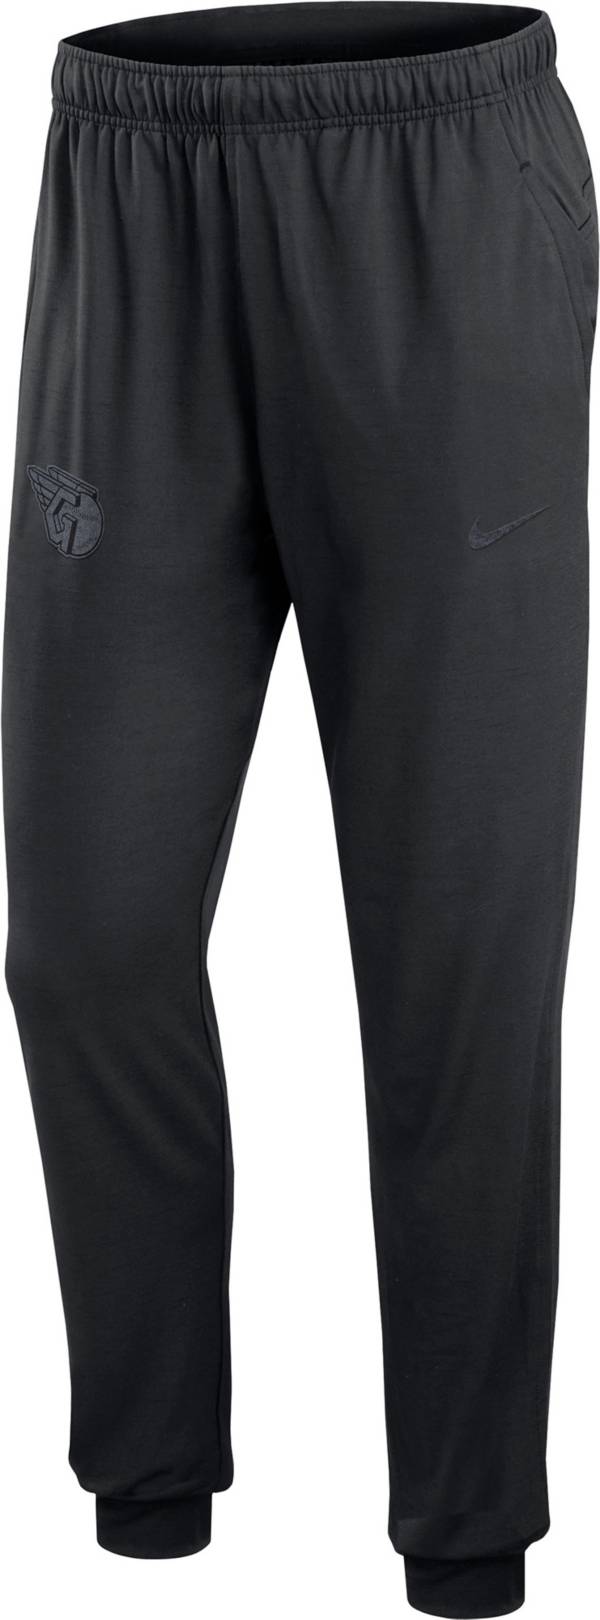 Nike Men's Cleveland Guardians Black Authentic Collection Travel Pant product image